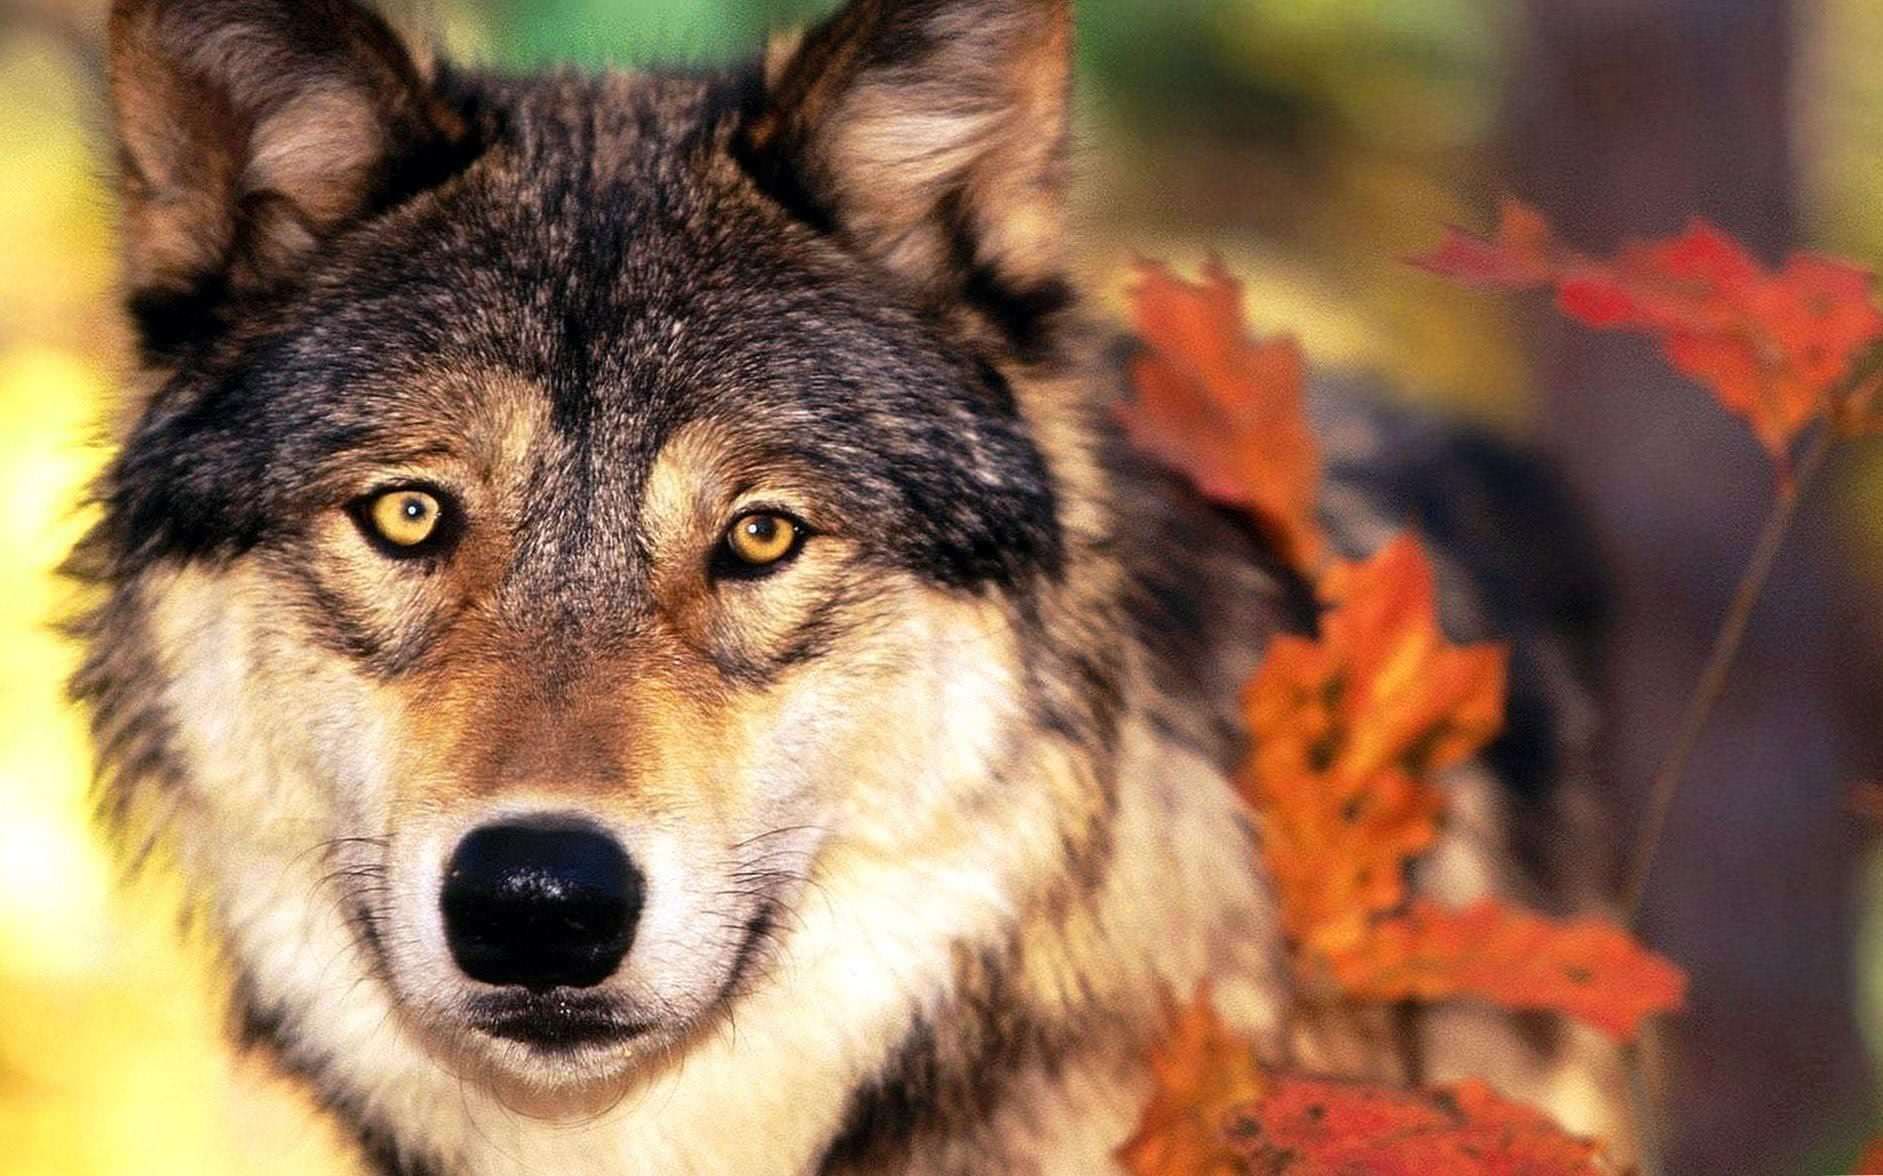 Wildlife Wolf Wallpapers